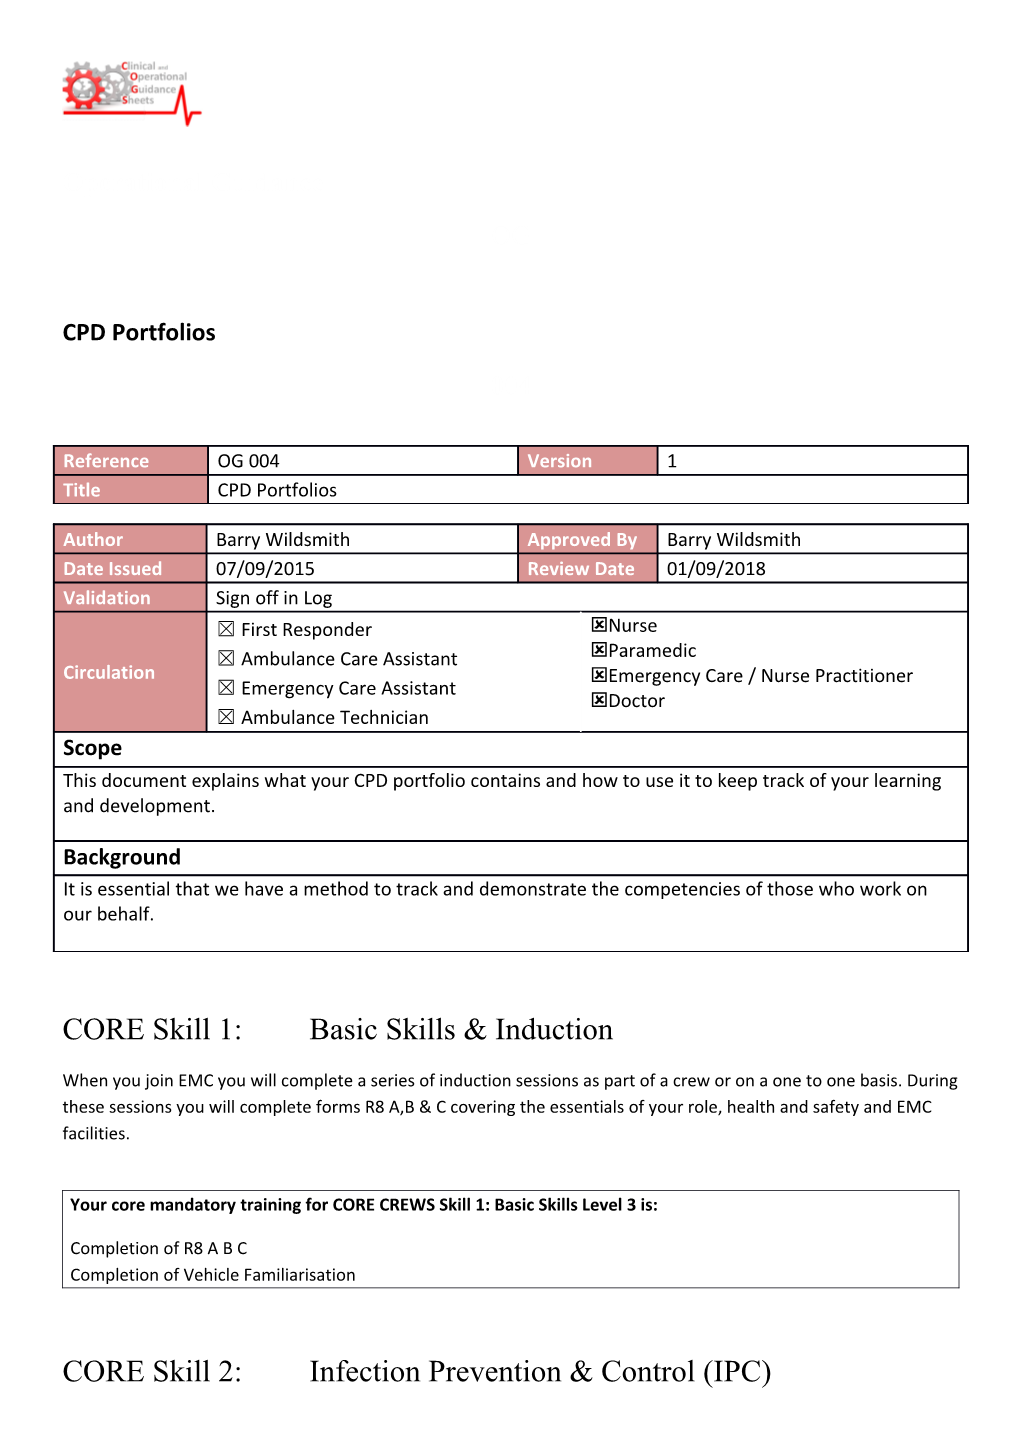 Your Core Mandatory Training for CORE CREWS Skill 1:Basic Skills Level 3 Is